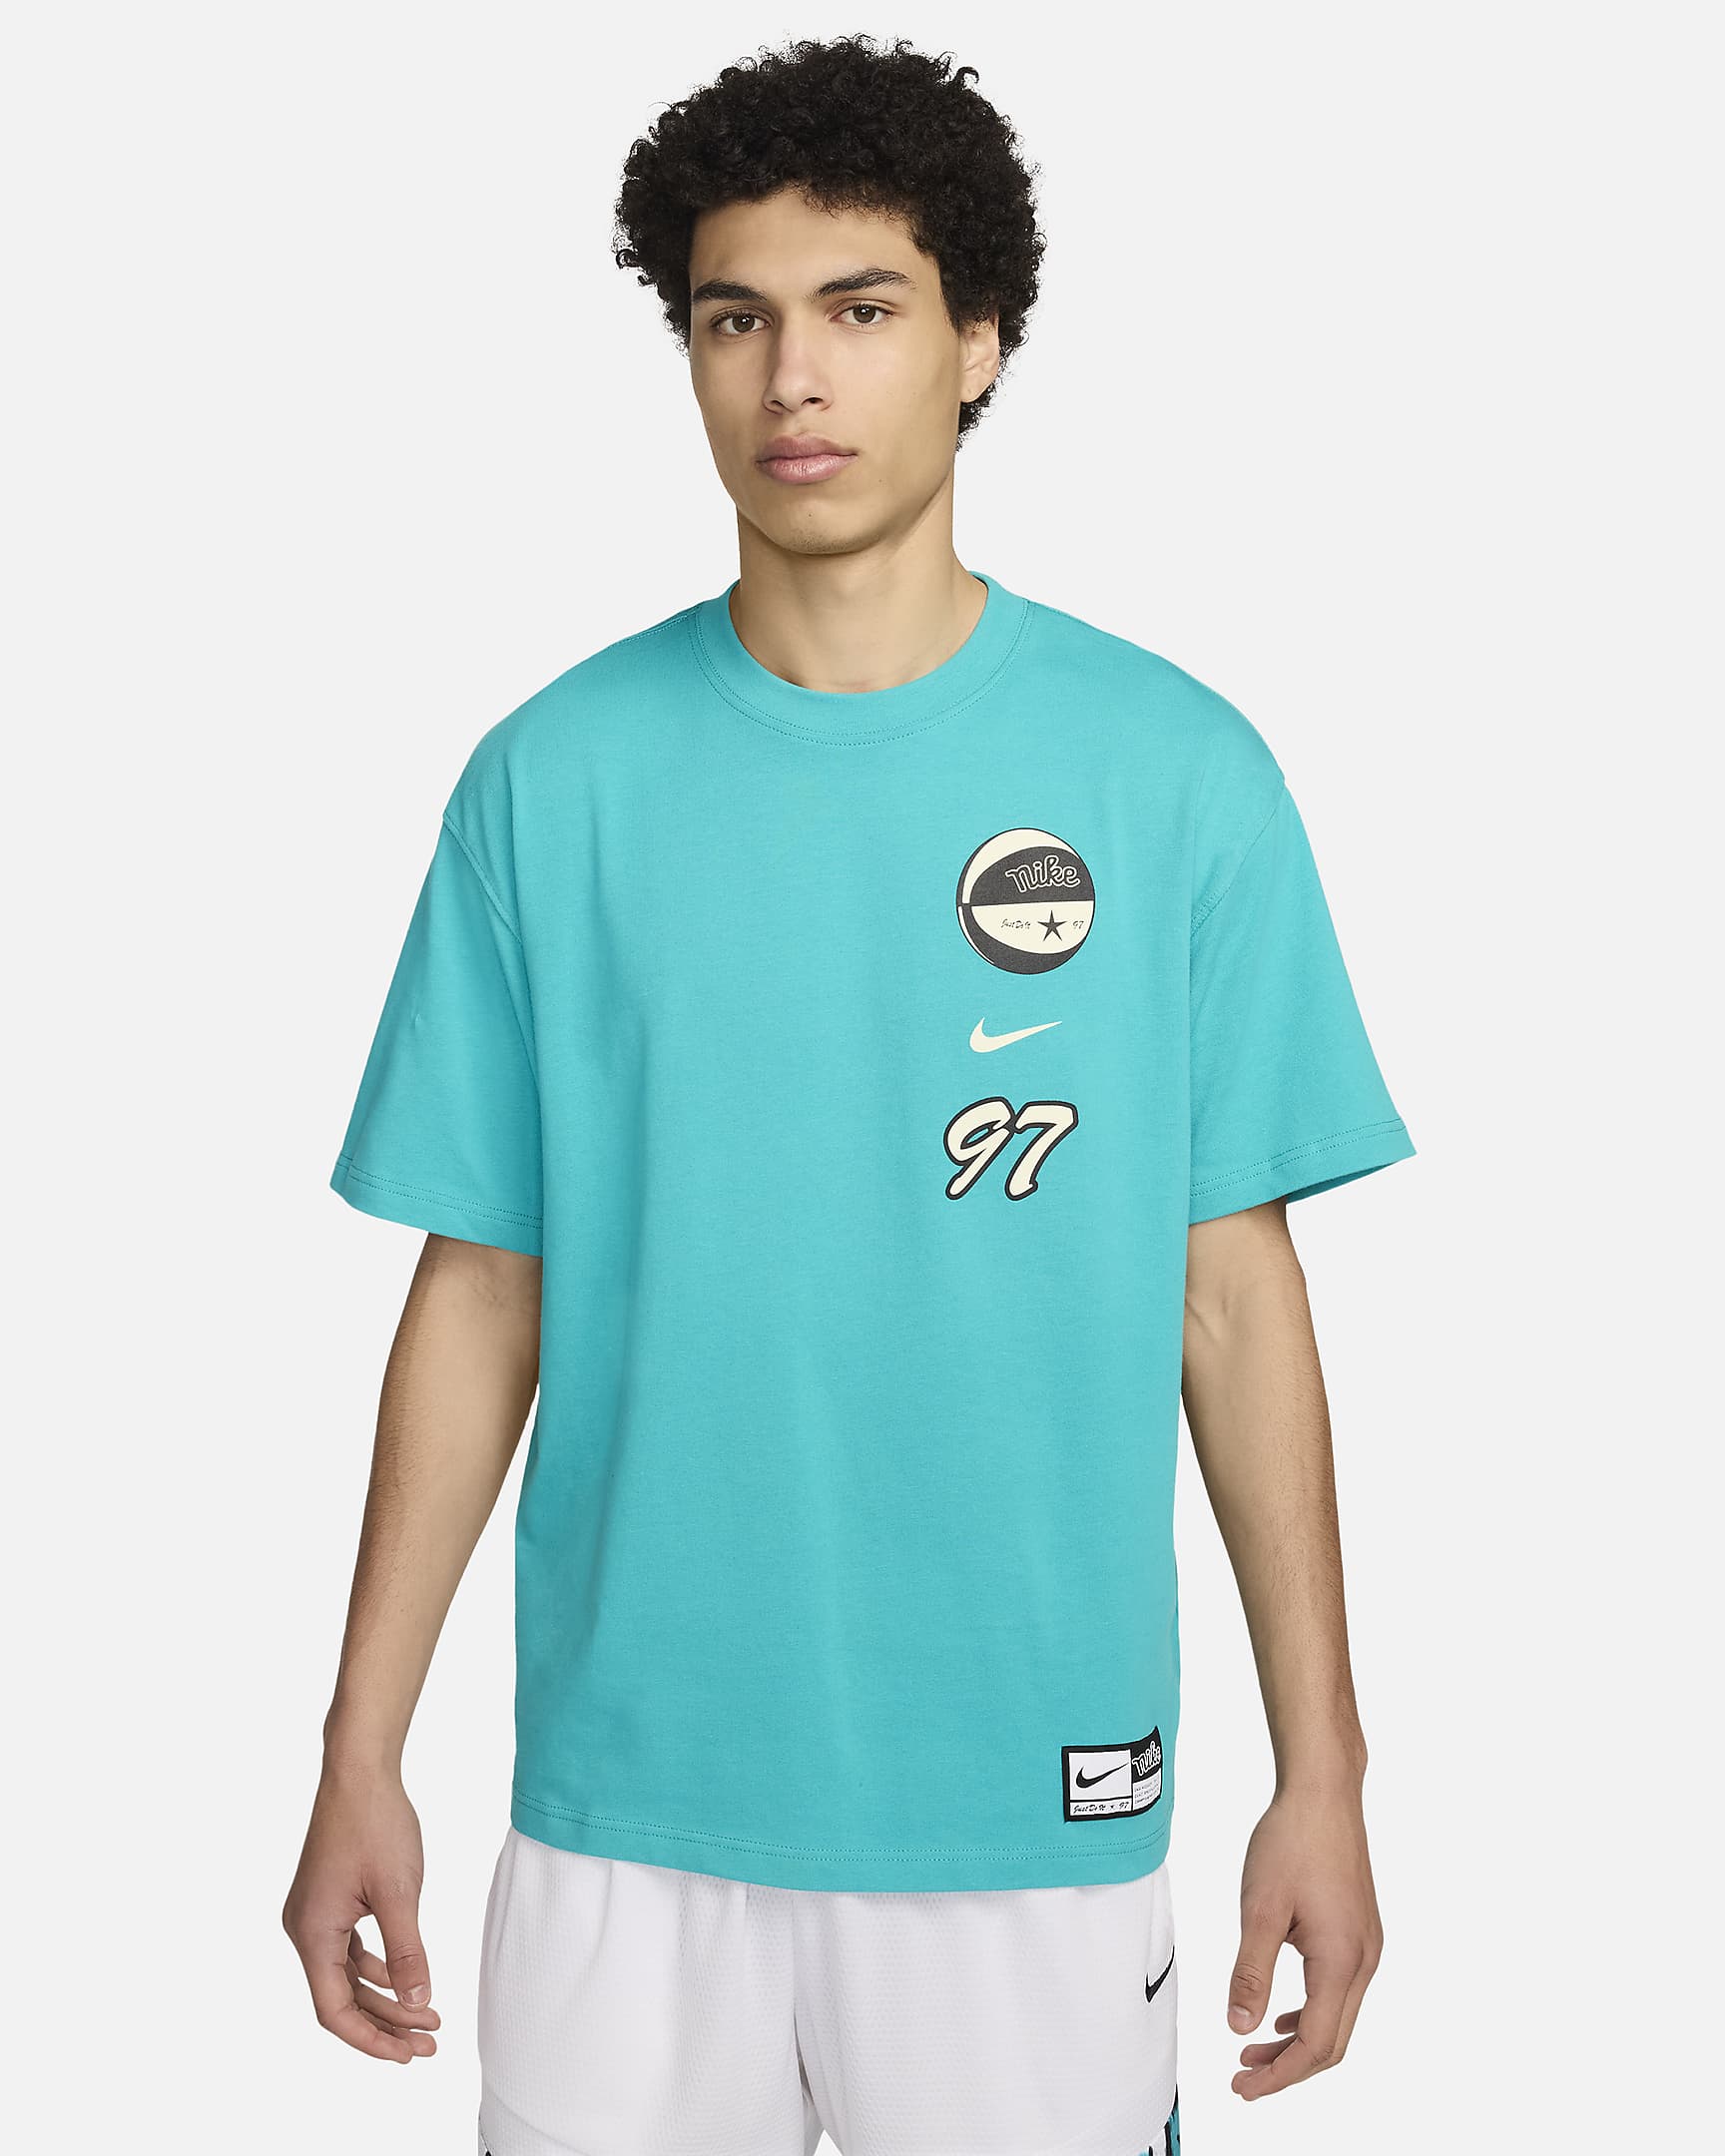 Nike Men's Max90 Basketball T-Shirt - Dusty Cactus